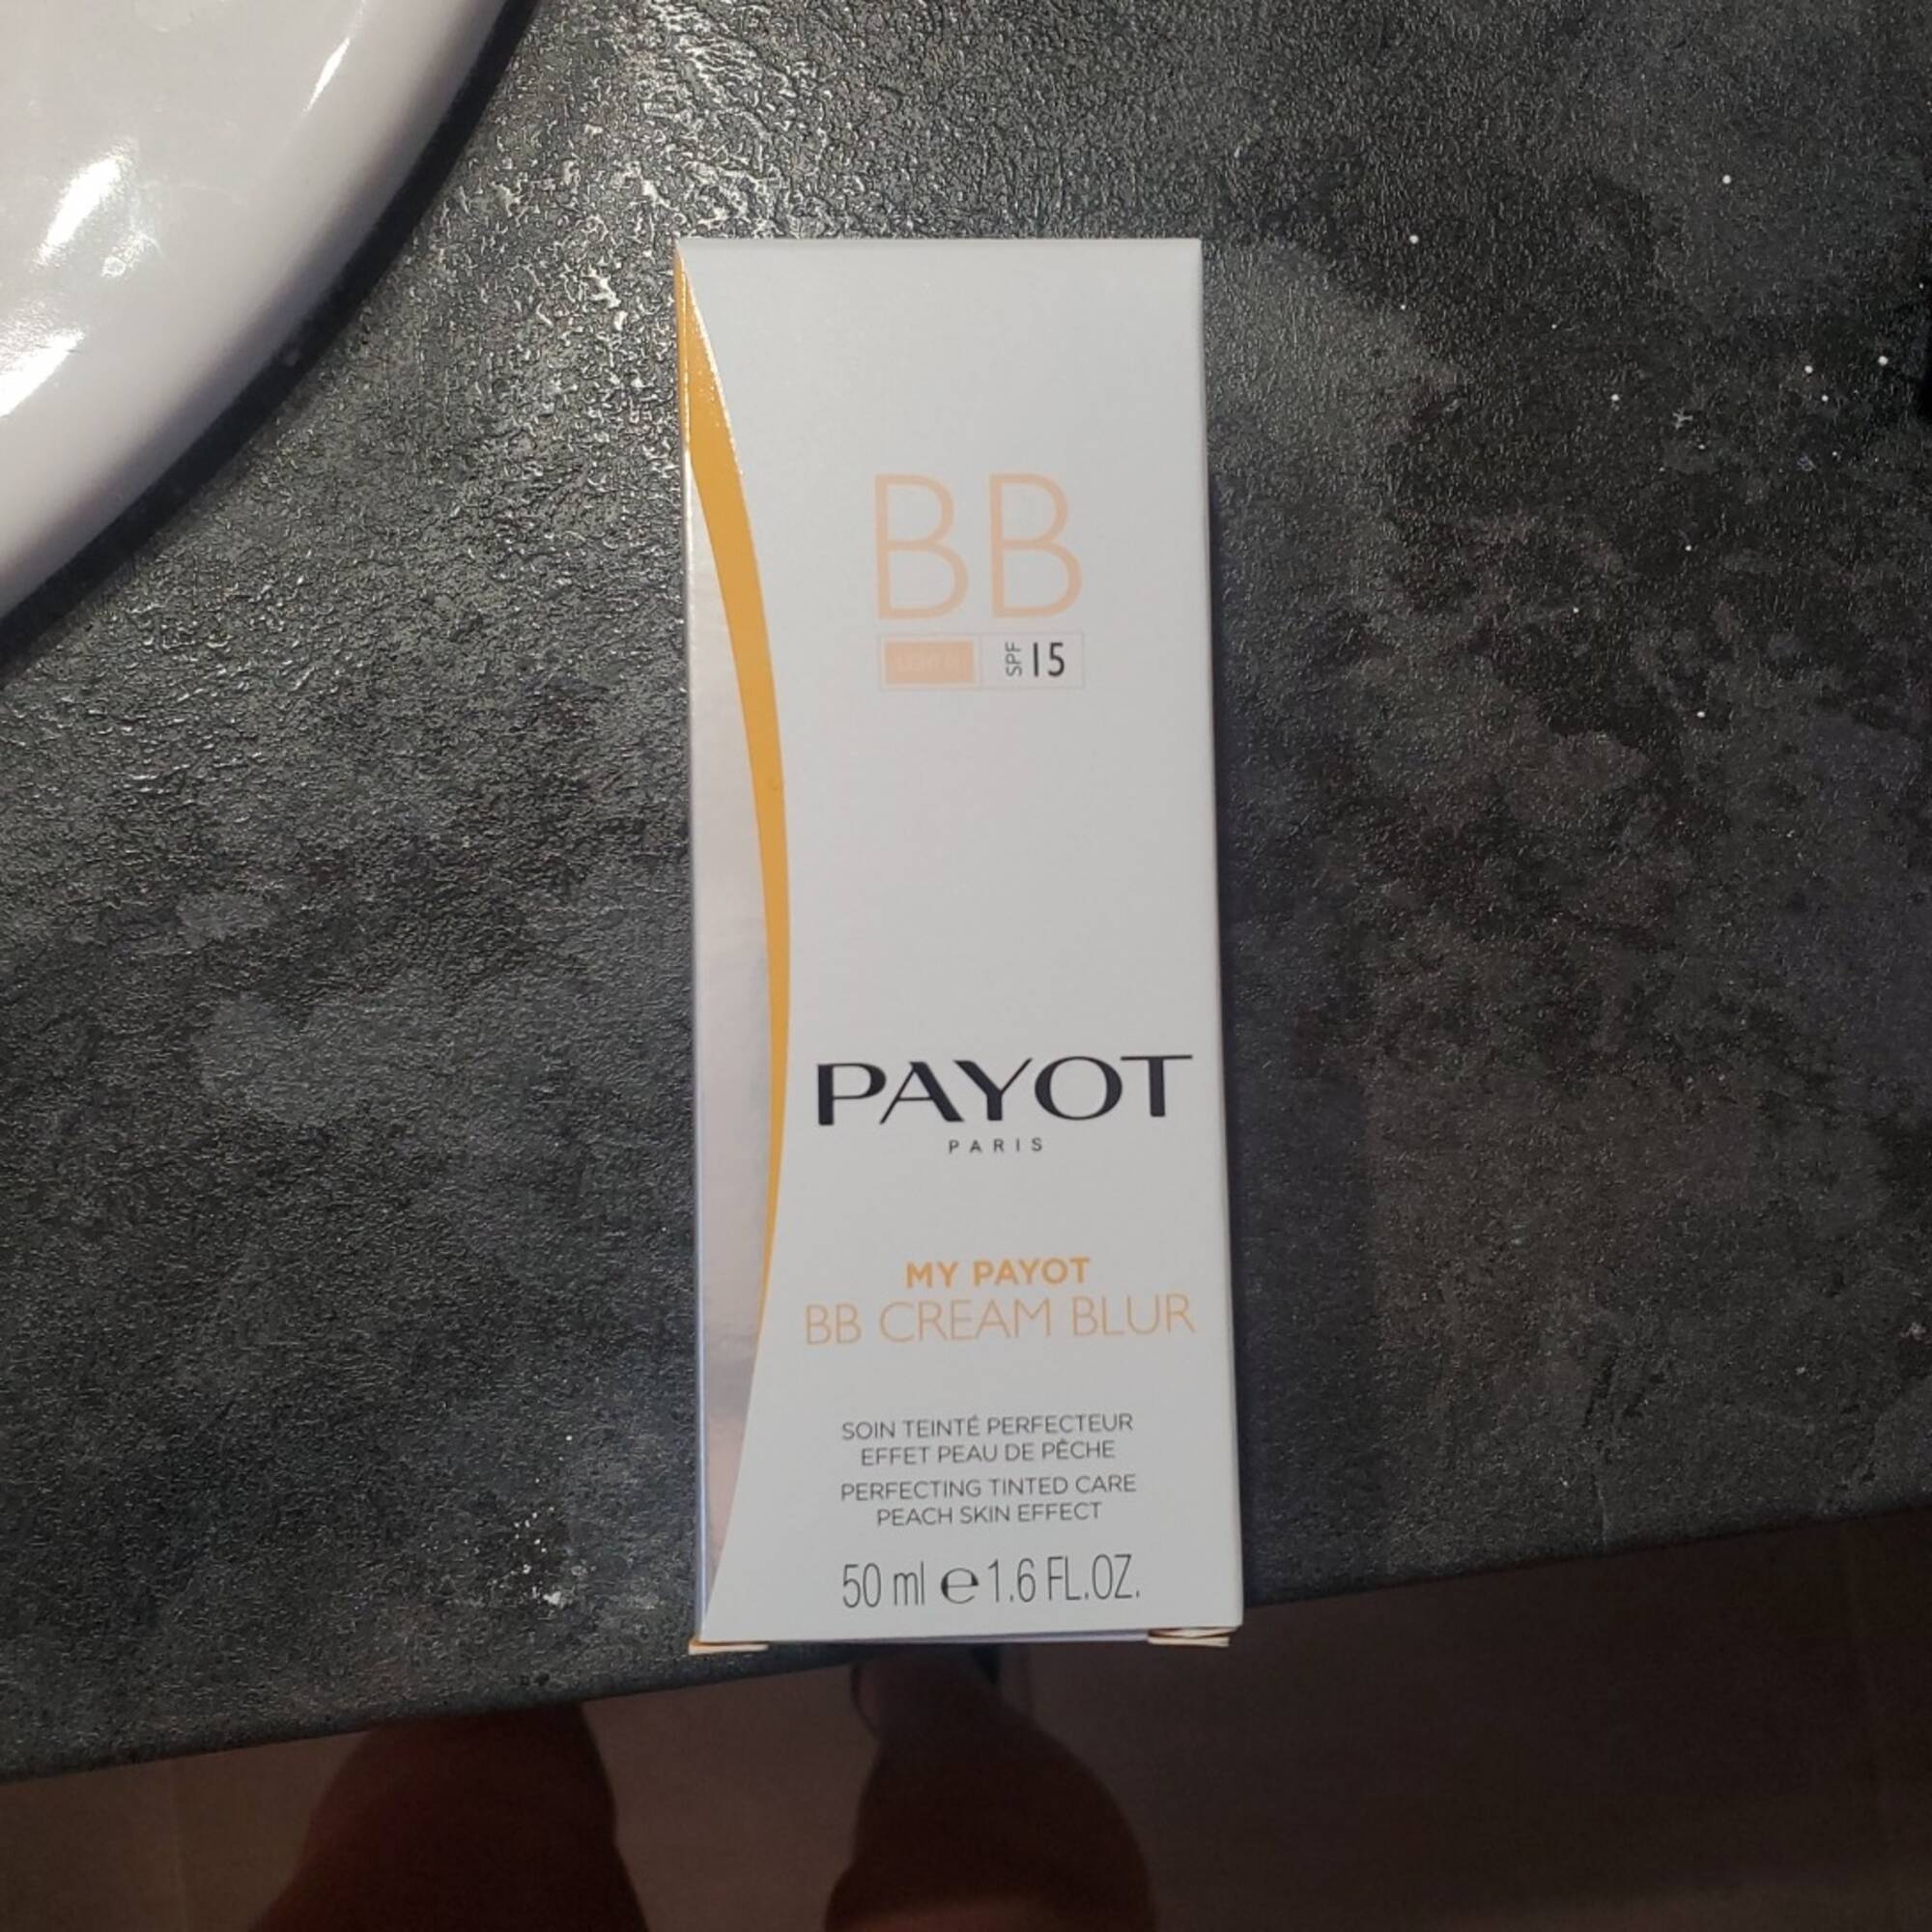 PAYOT - My Payot - BB cream blur